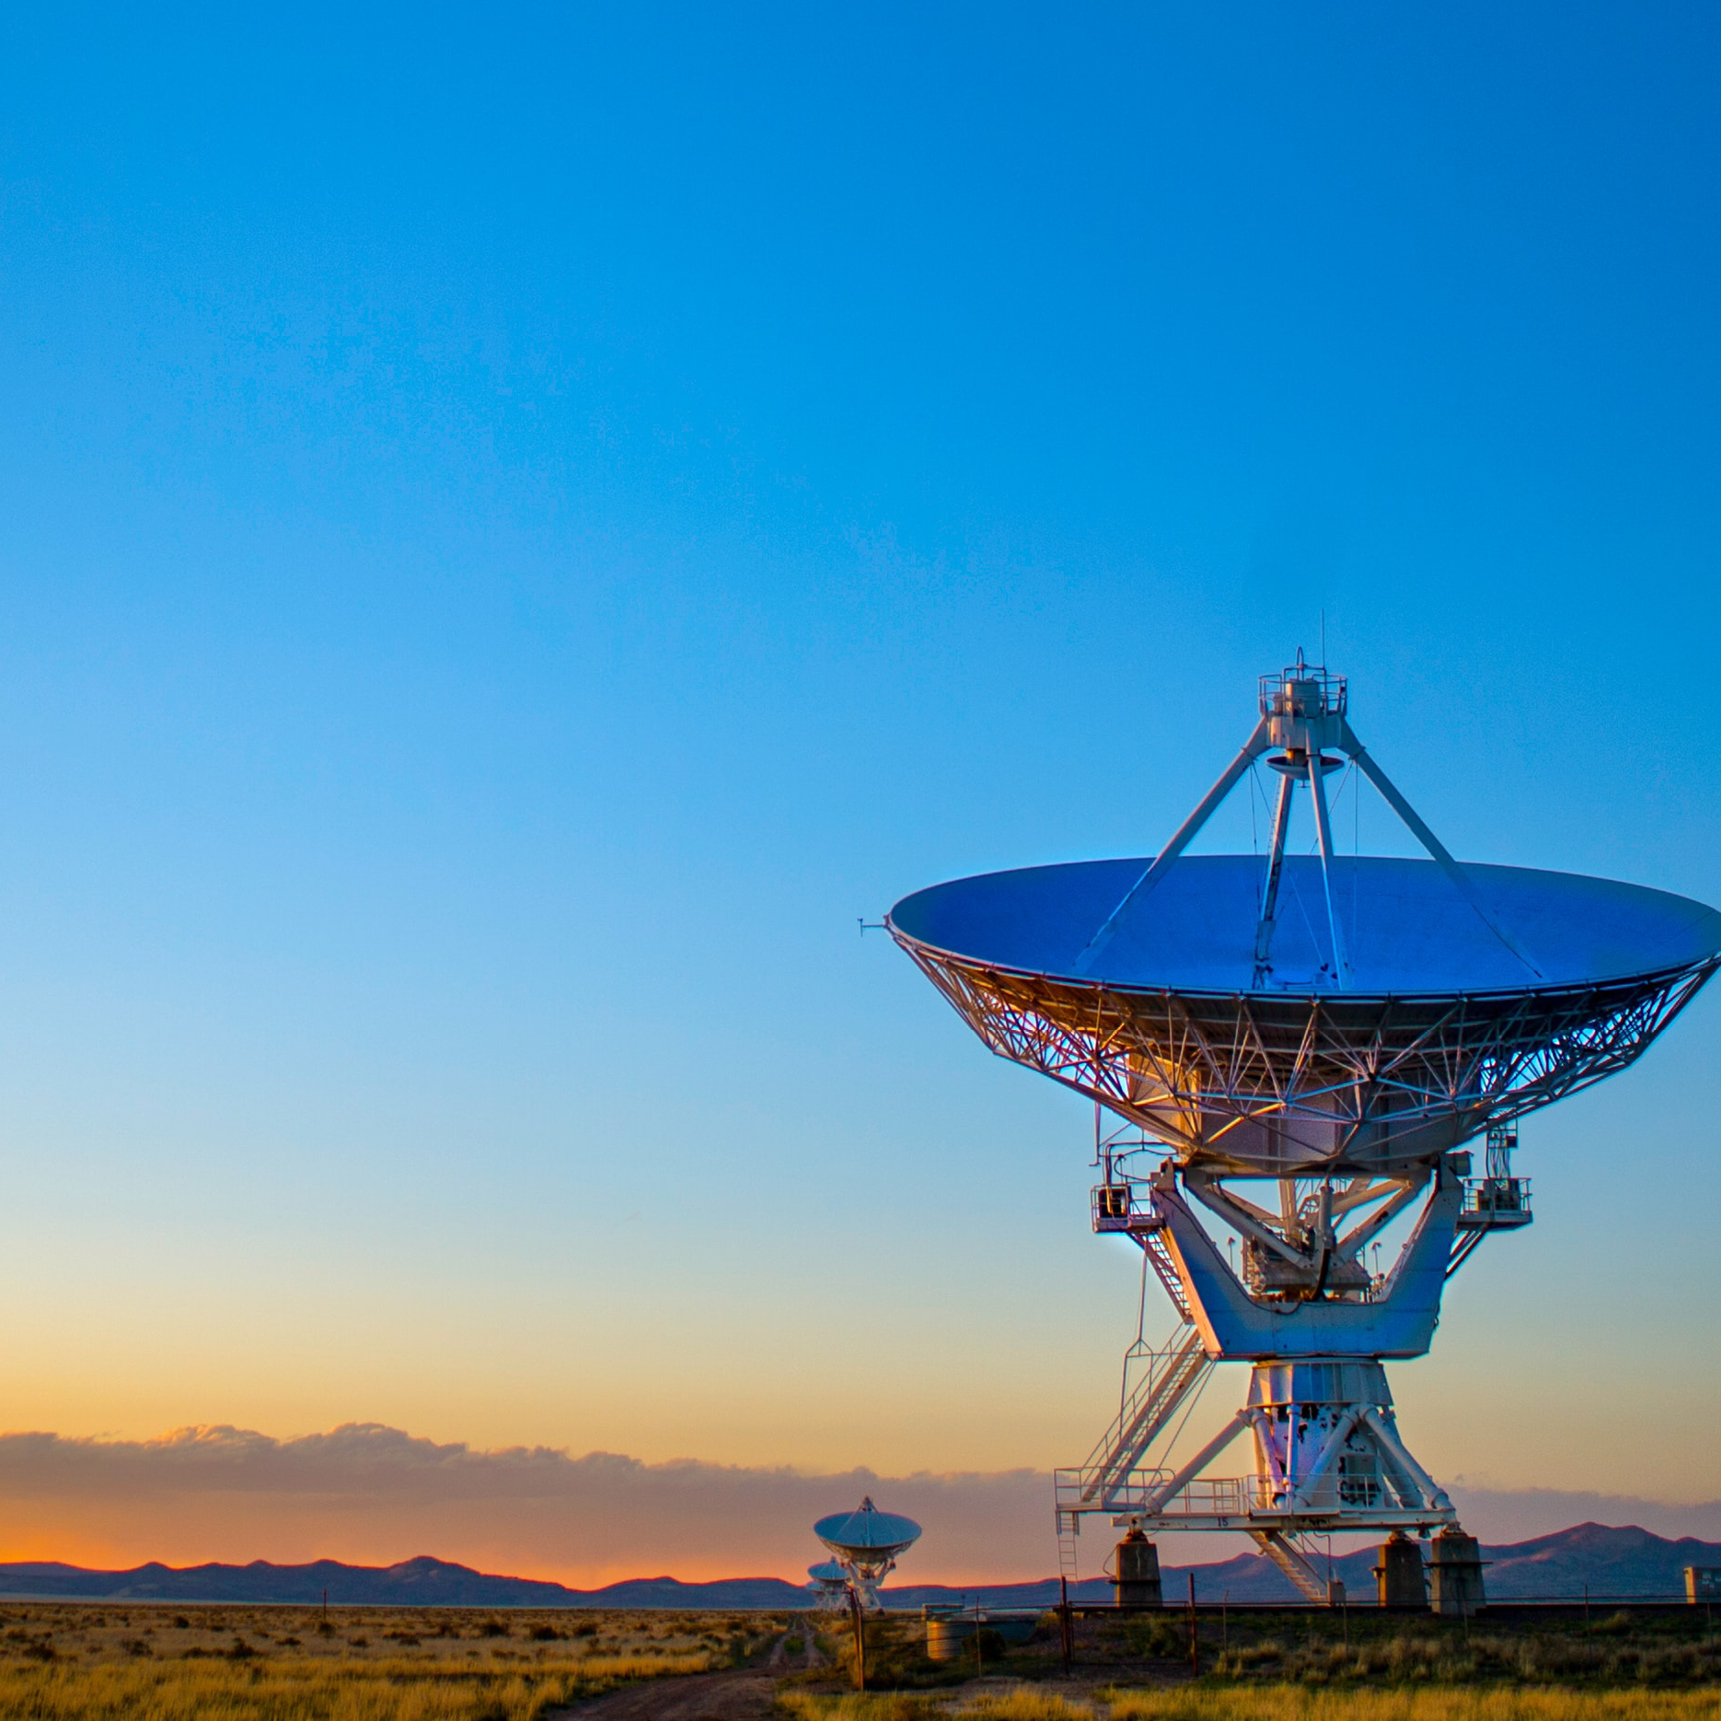 a radio telescope in a desert landscape at dusk